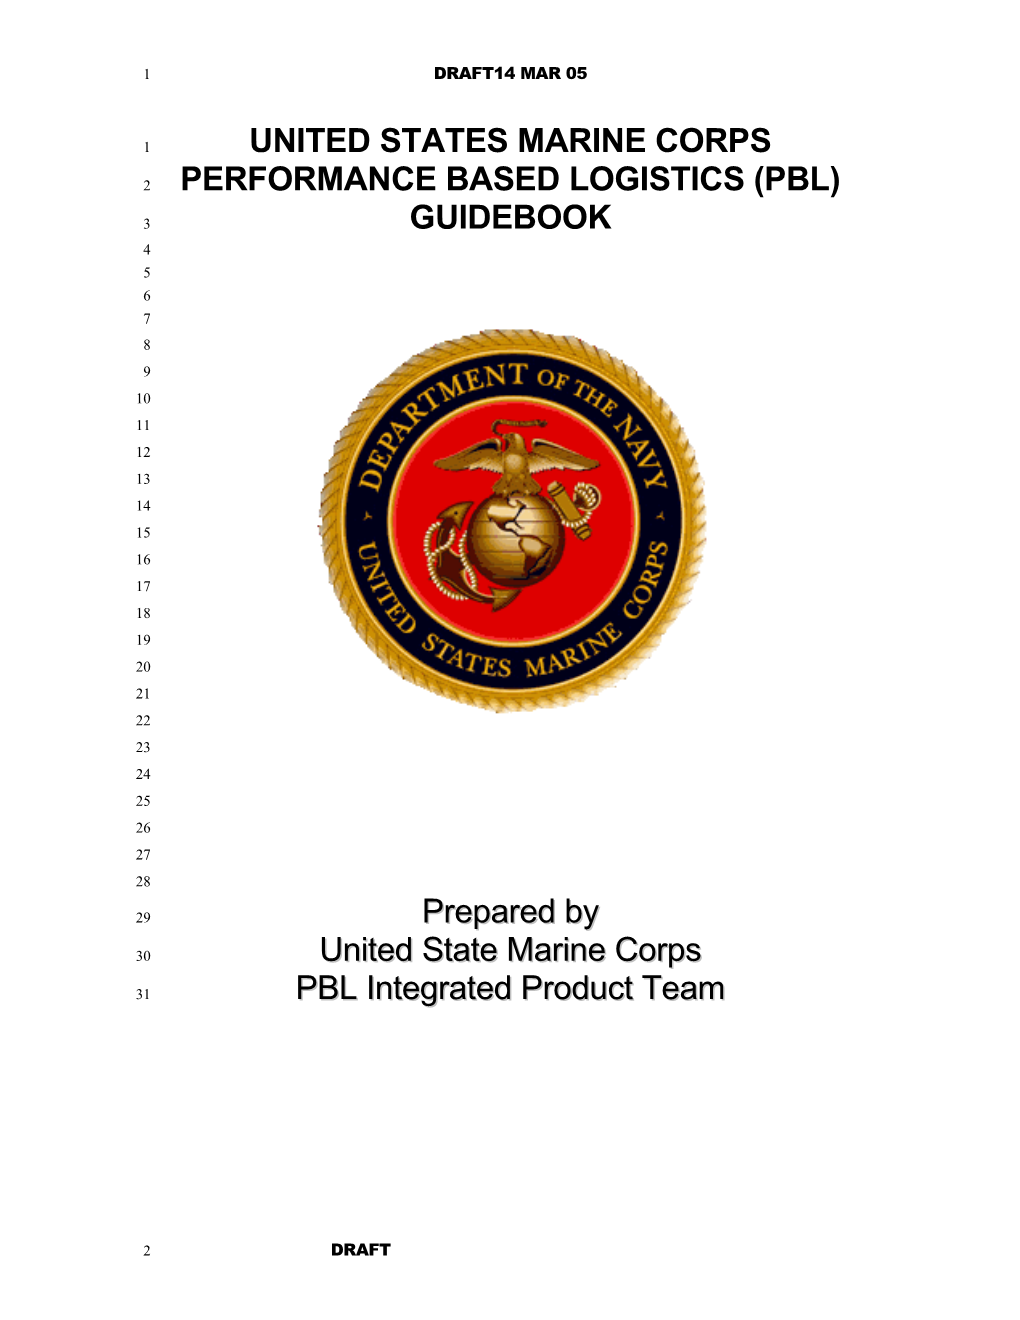 DRAFT USMC PBL Guide 2005